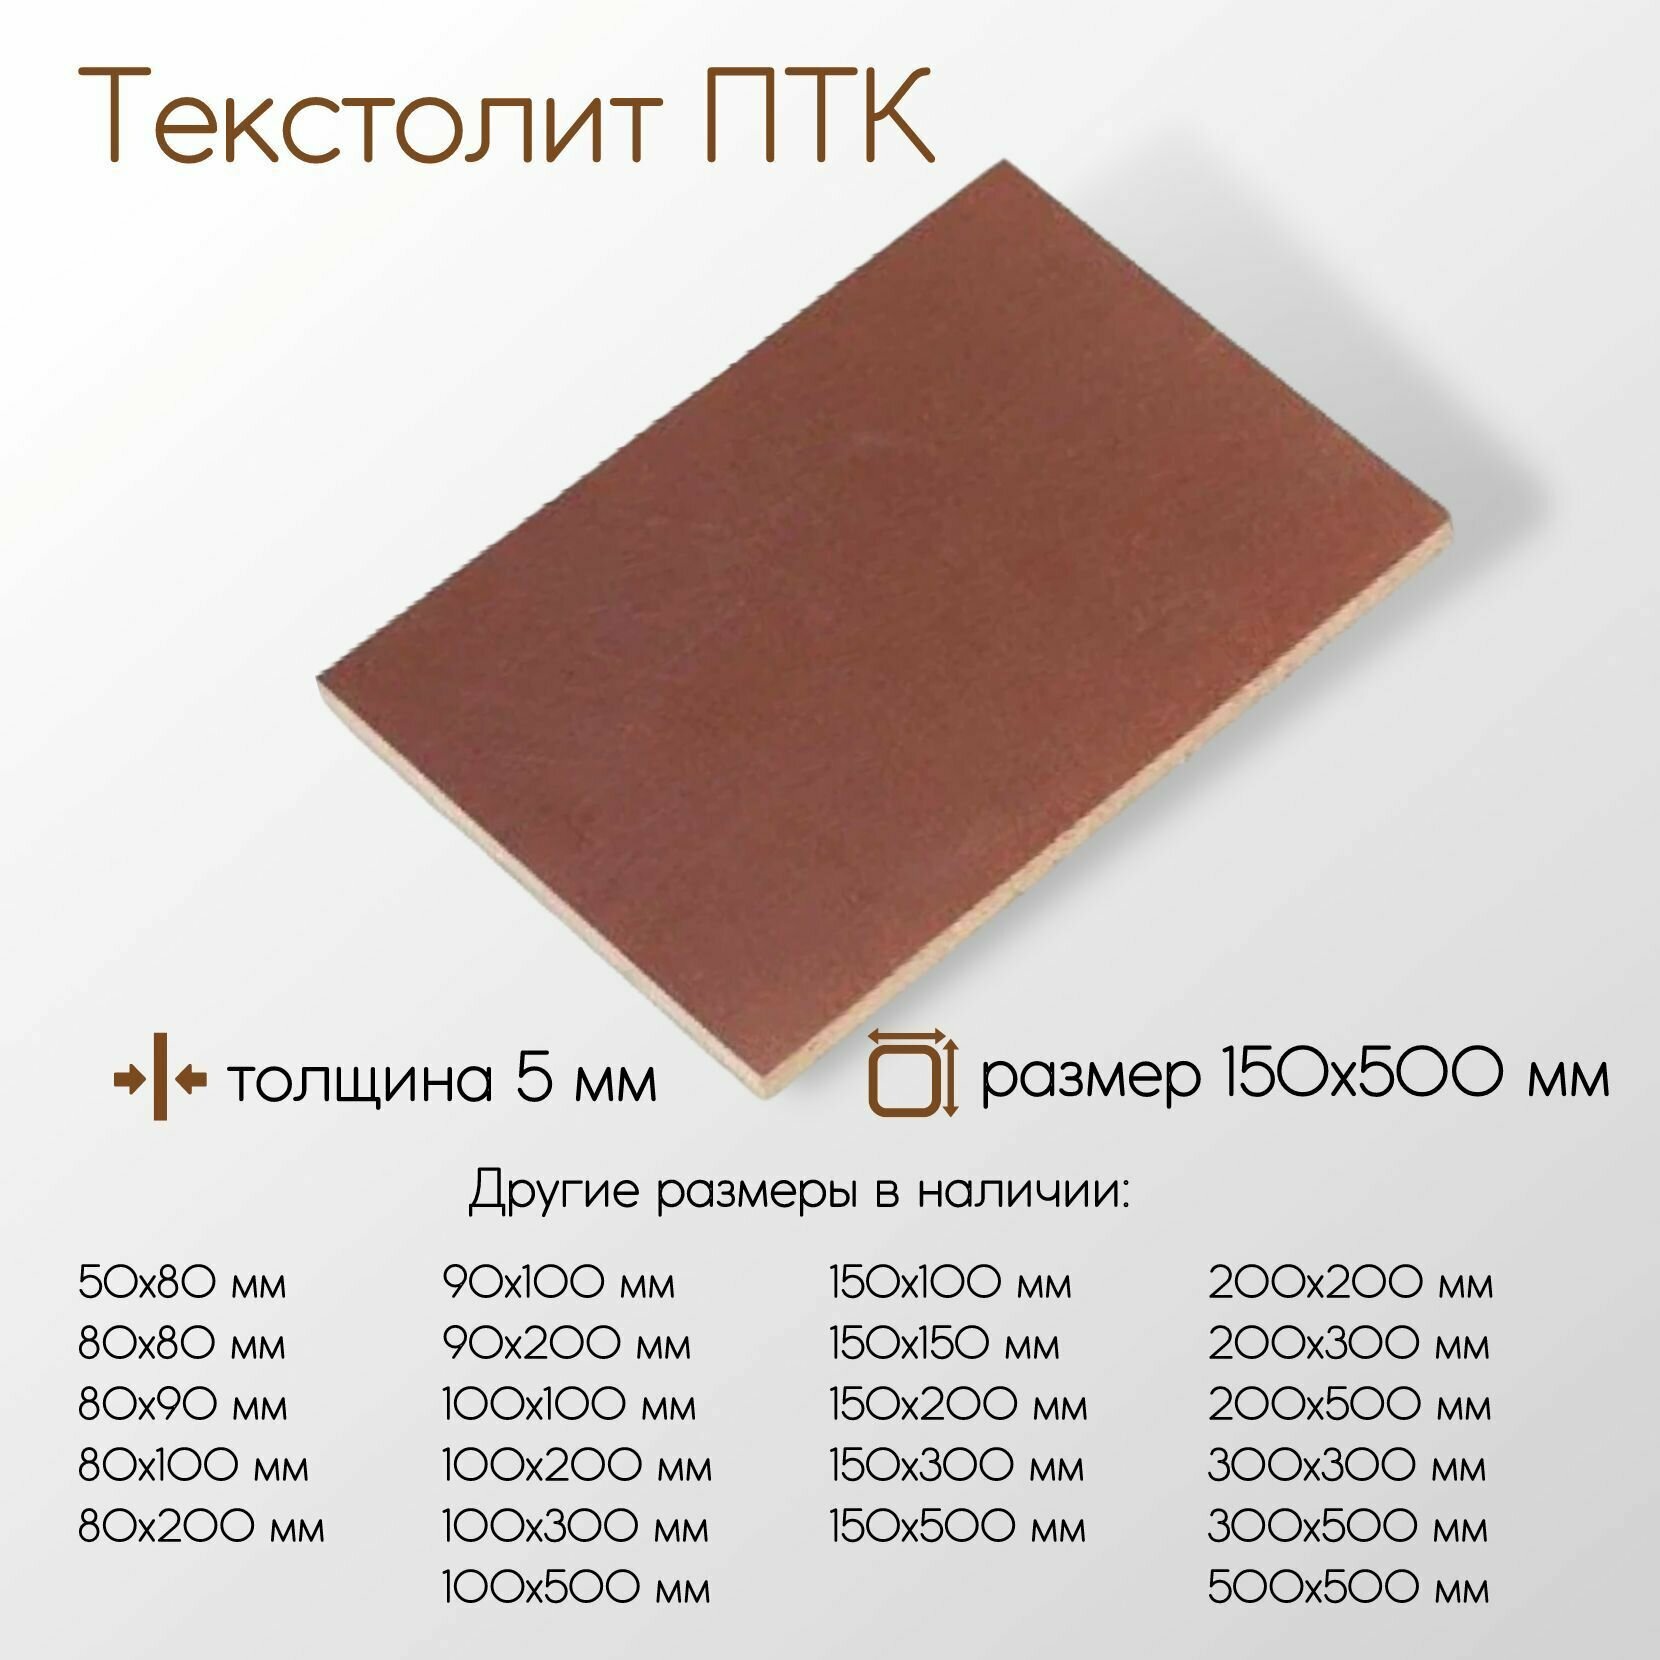 Текстолит ПТК лист толщина 5 мм 5x150x500 мм